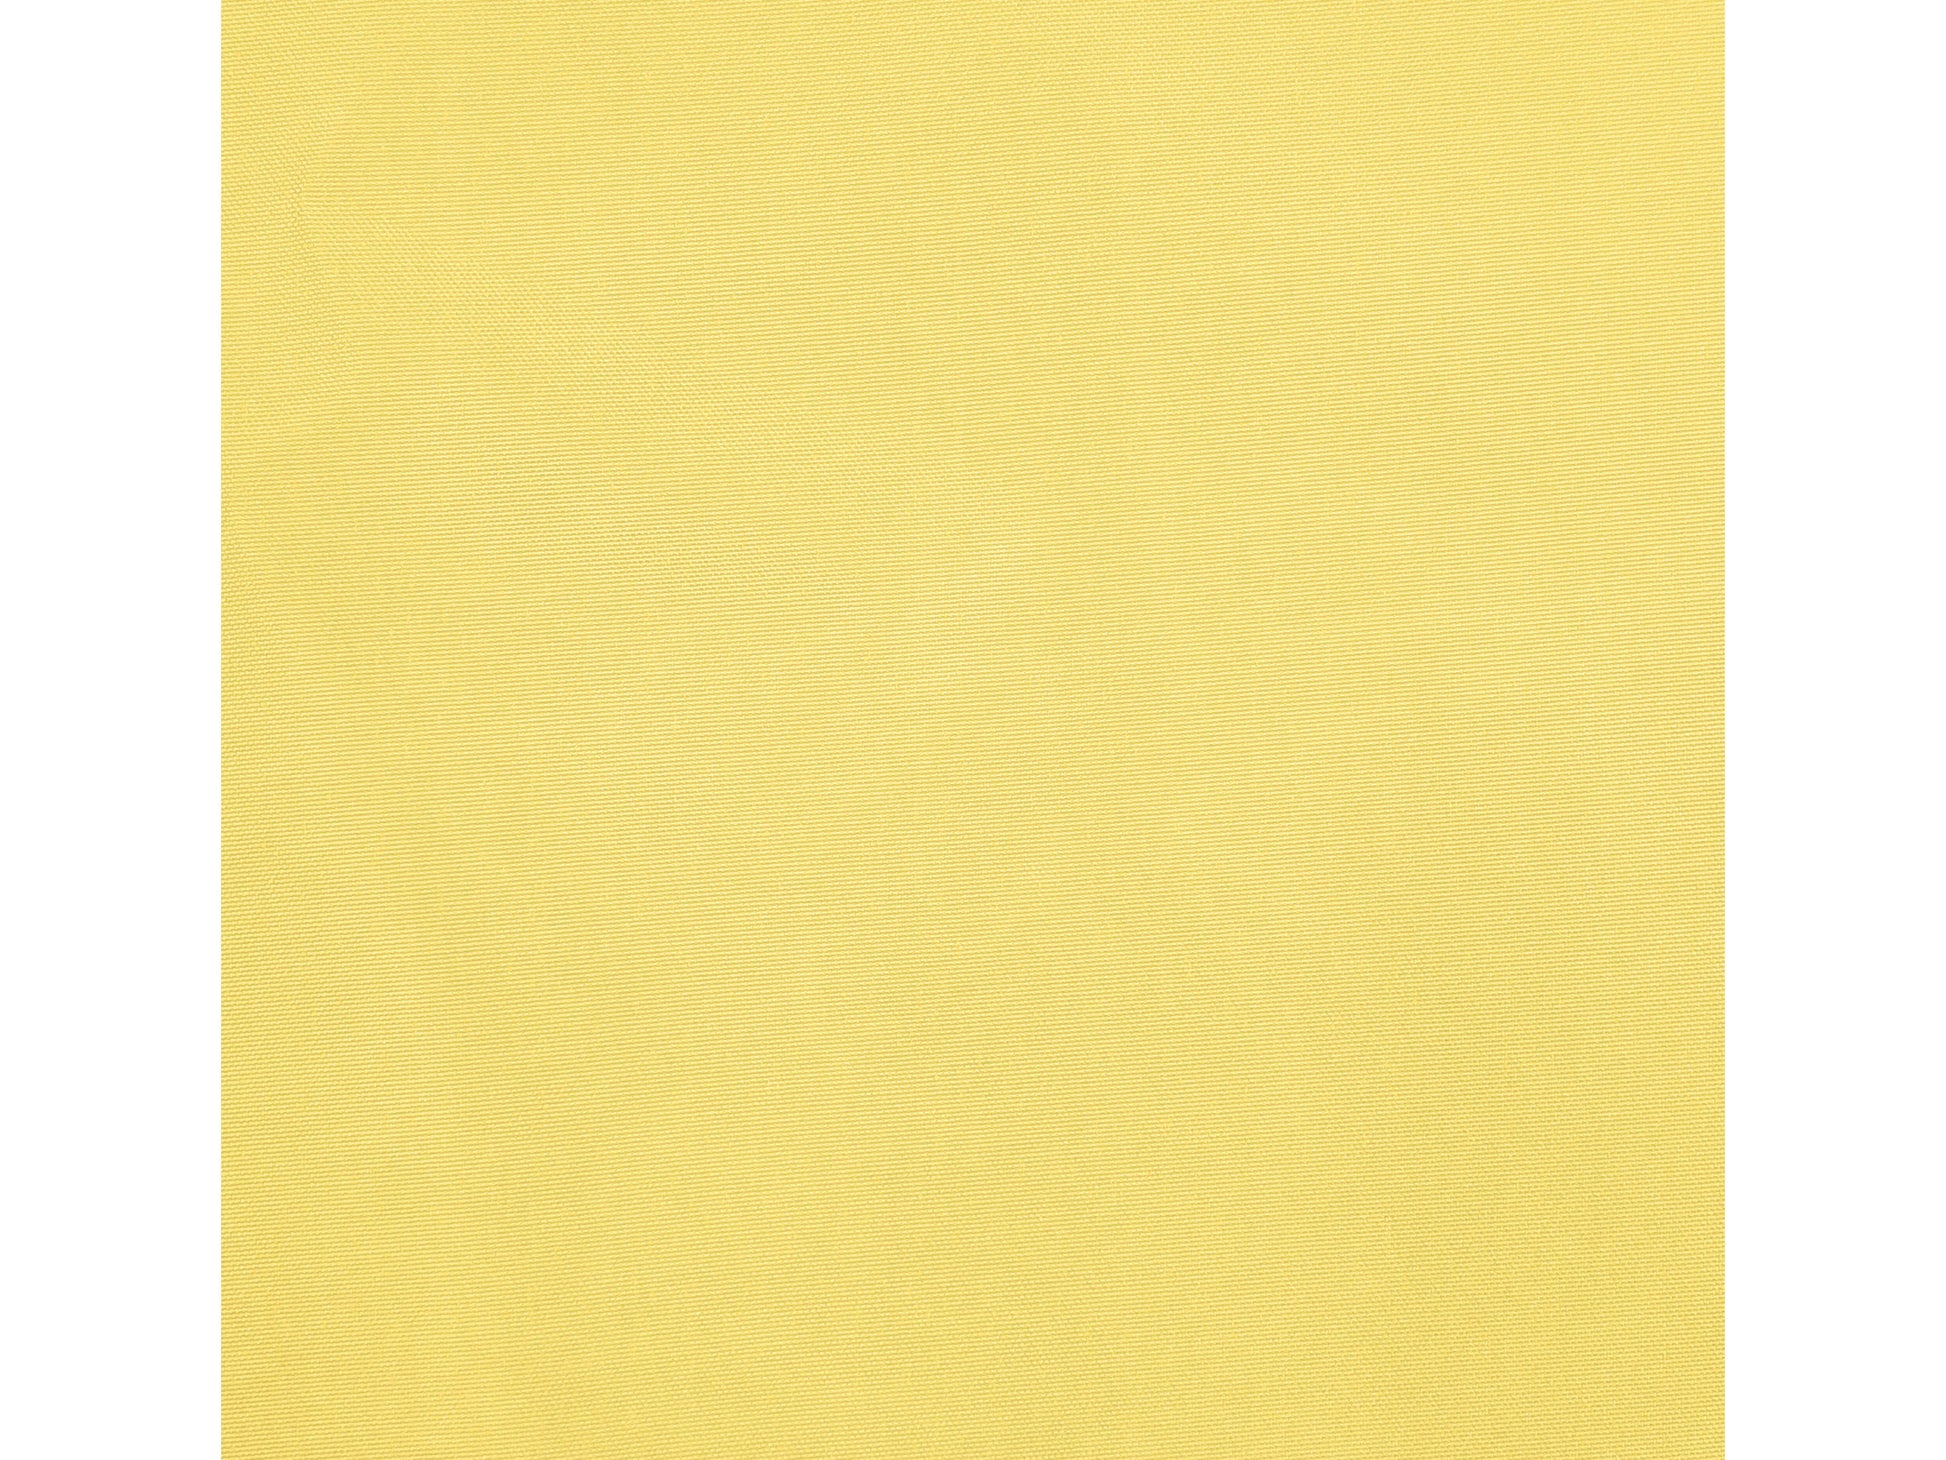 yellow square patio umbrella, tilting 300 Series detail image CorLiving#color_yellow